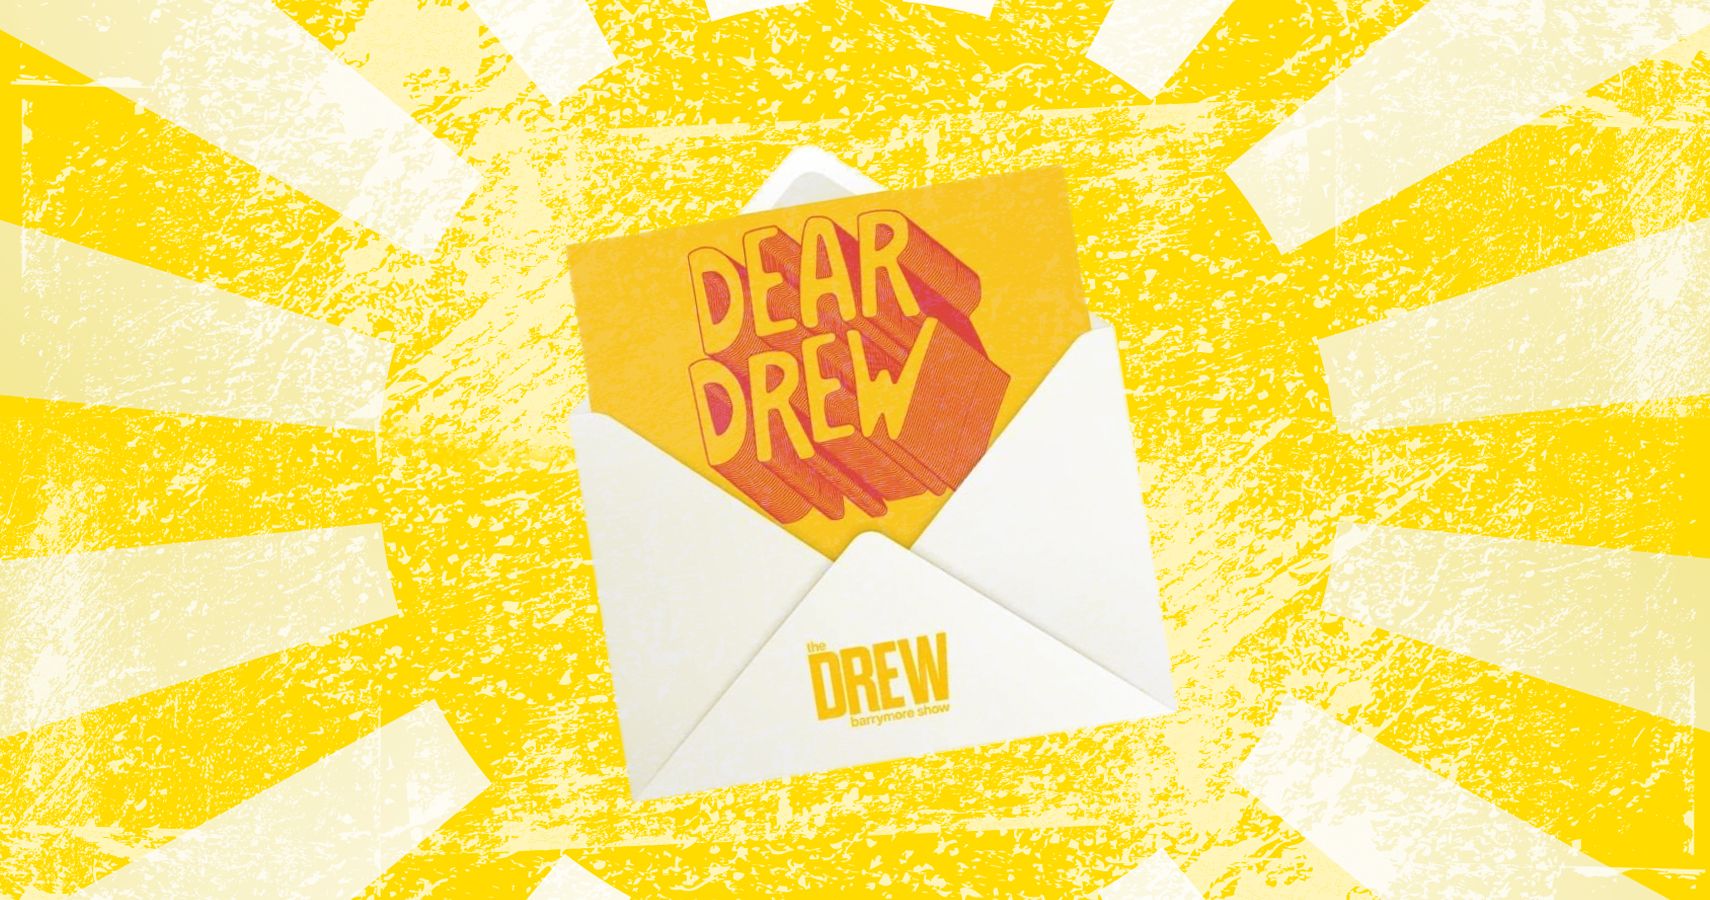 Drew Barrymore’s “Dear Drew” Just Brighten Up Everyone’s Day